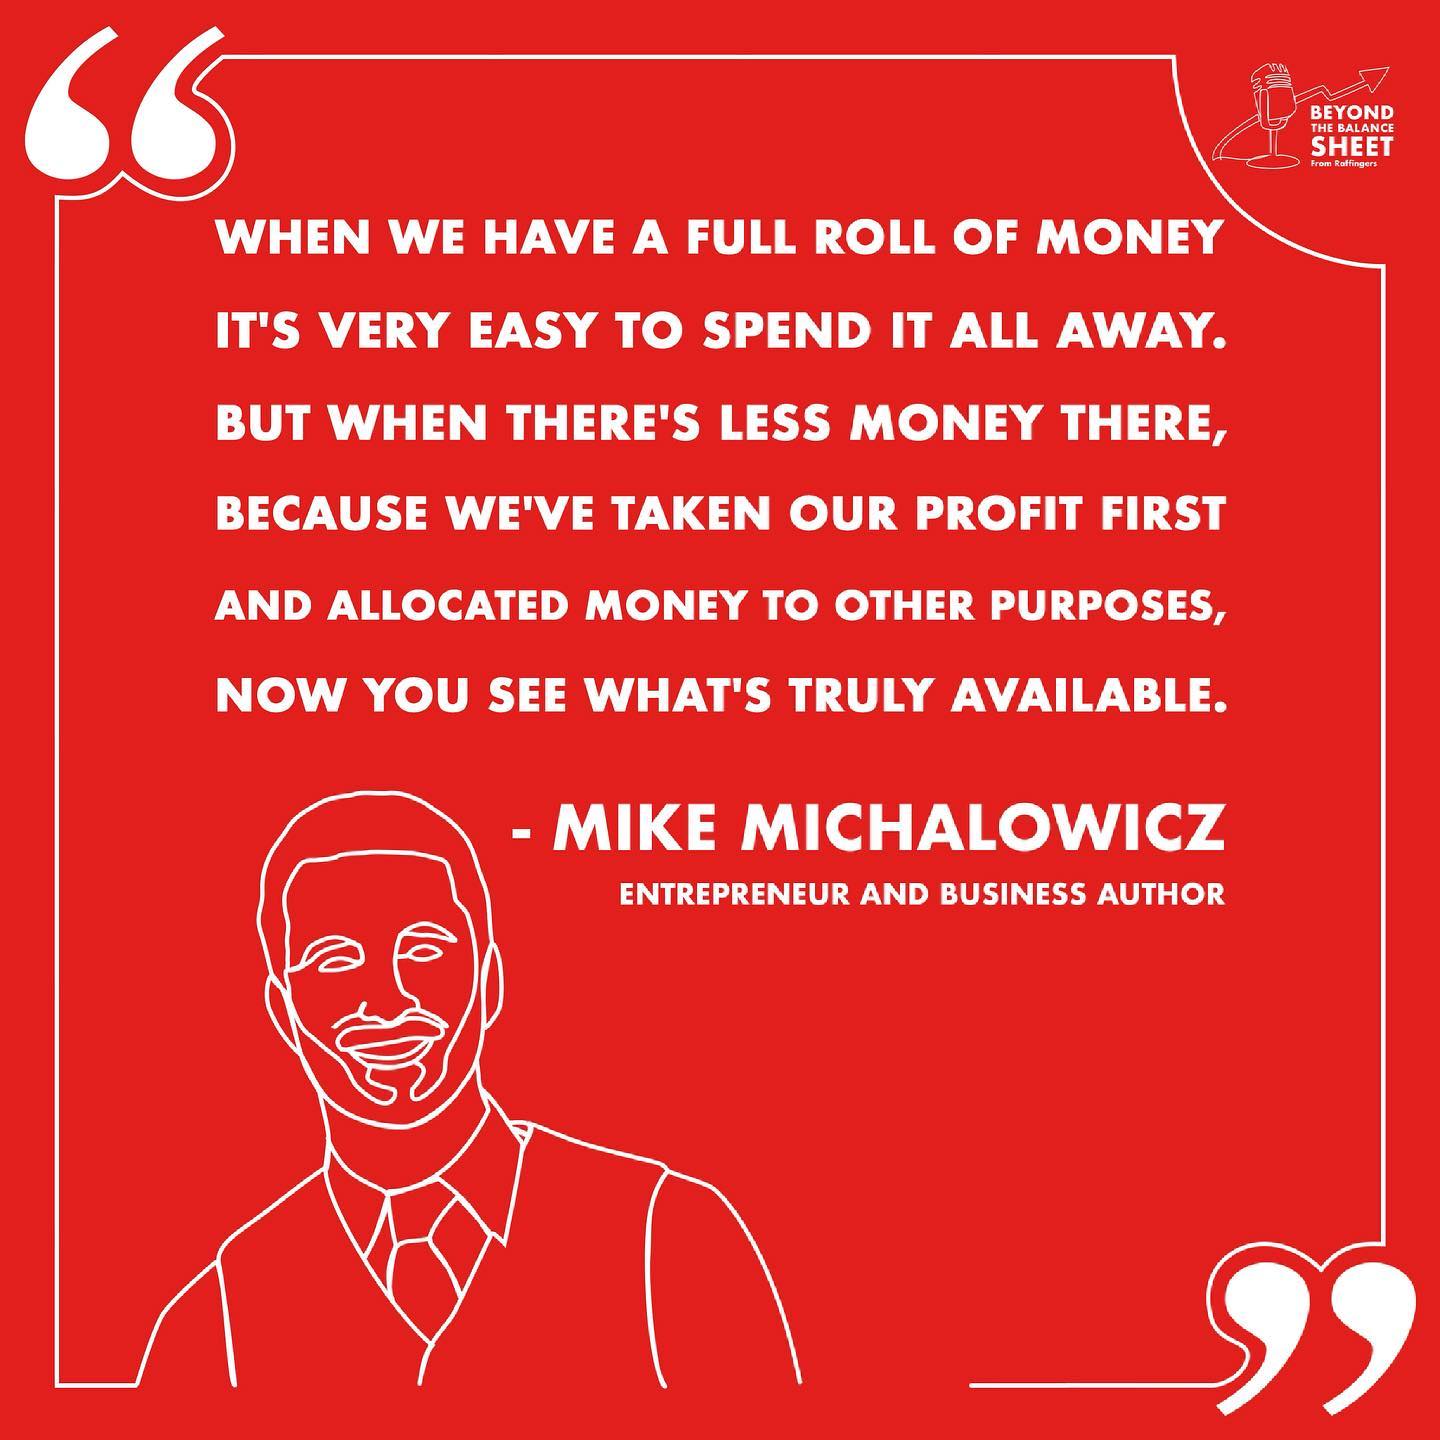 Mike Michalowicz profit first raffingers instagram